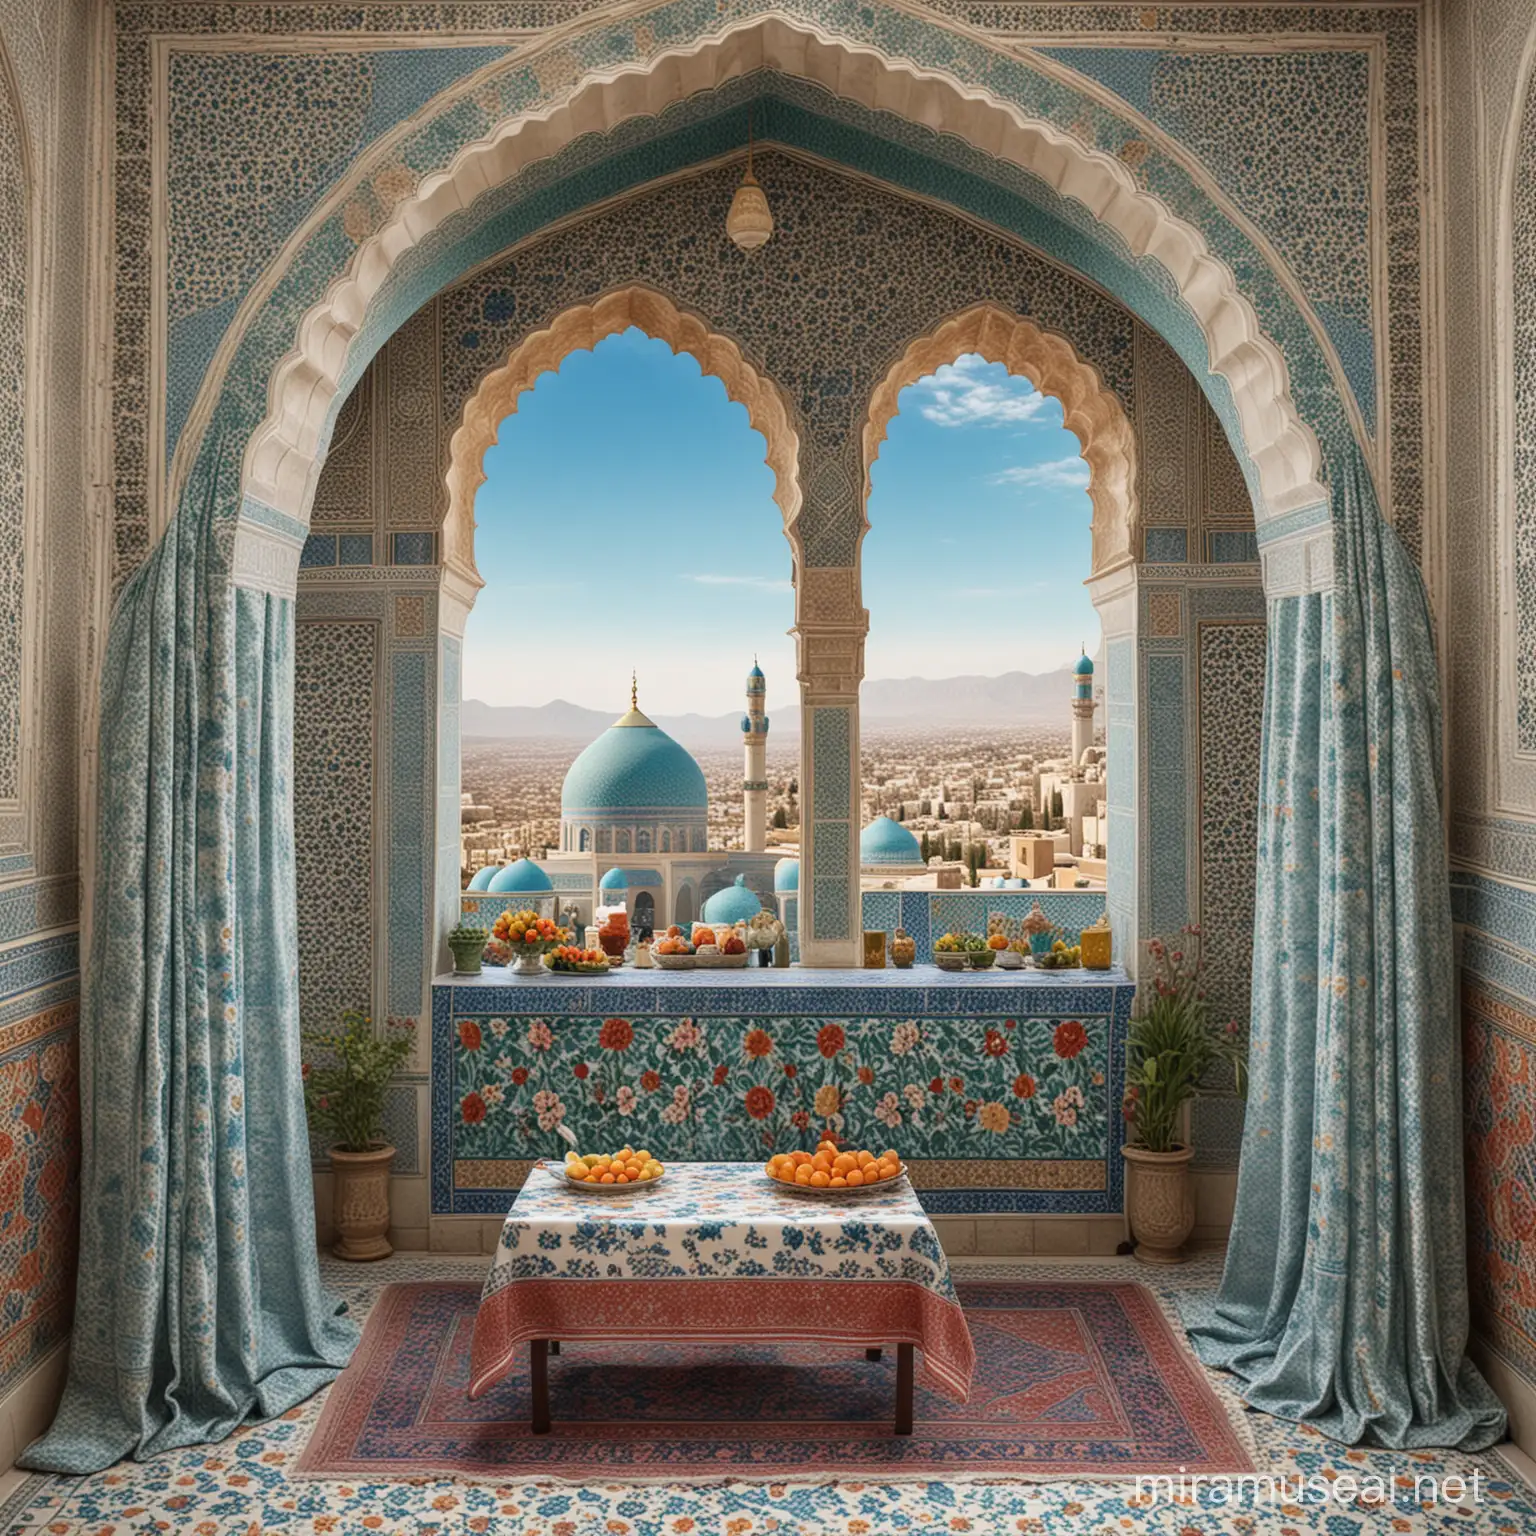 Exquisite Persian Tile Arch Fruitladen Porcelain Amidst Arabian Nights Mosque